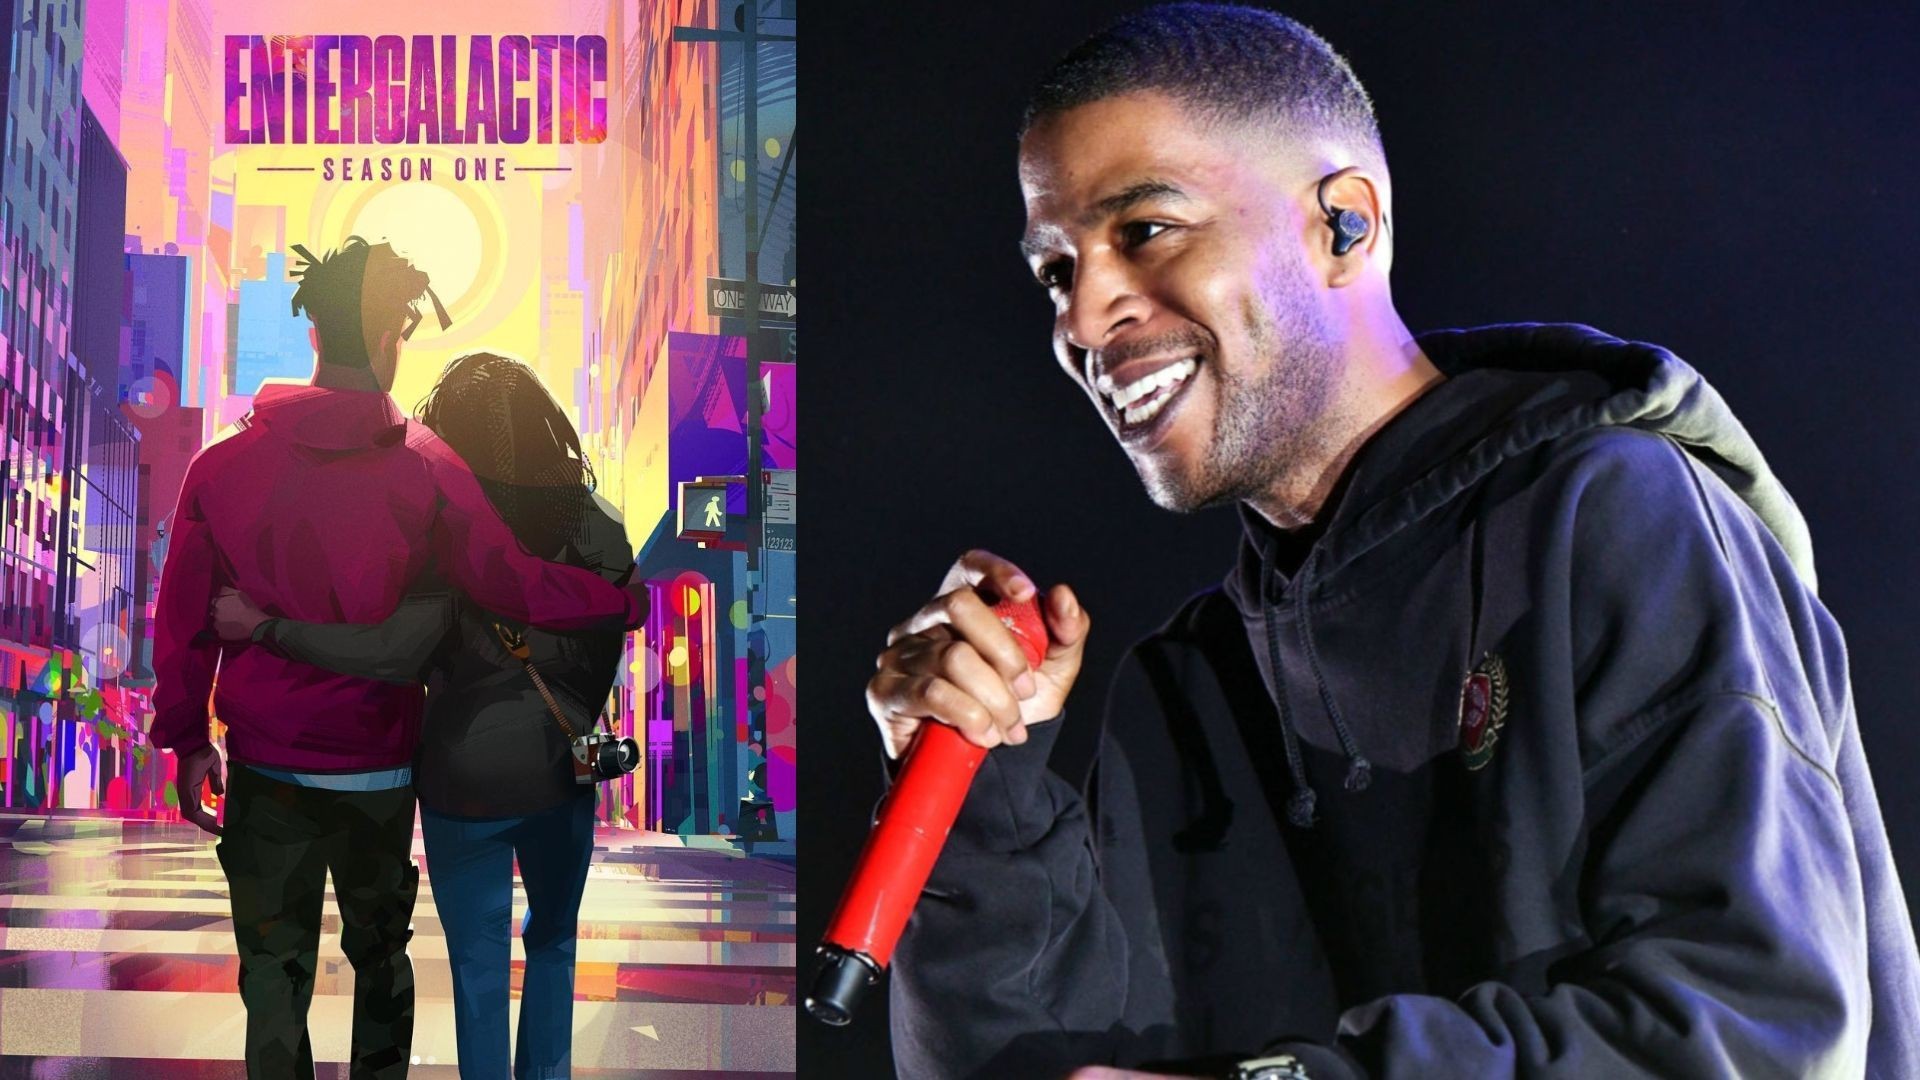 The man does not miss: Fans shower praises on Kid Cudi as rapper releases ' Entergalactic'